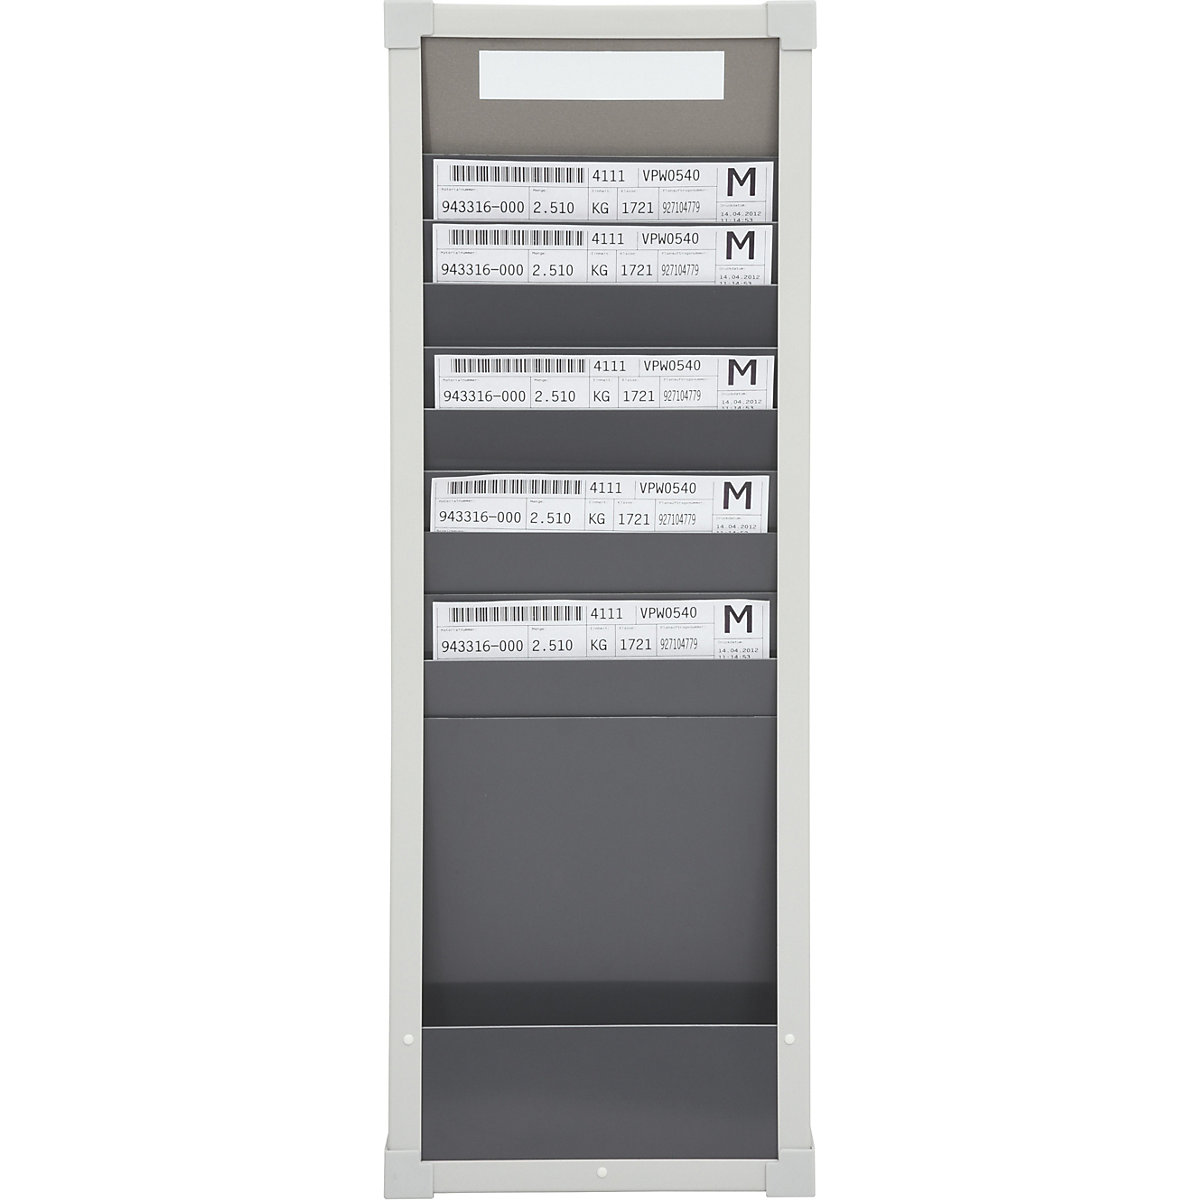 Panel modular clasificador para documentos – EICHNER (Imagen del producto 26)-25